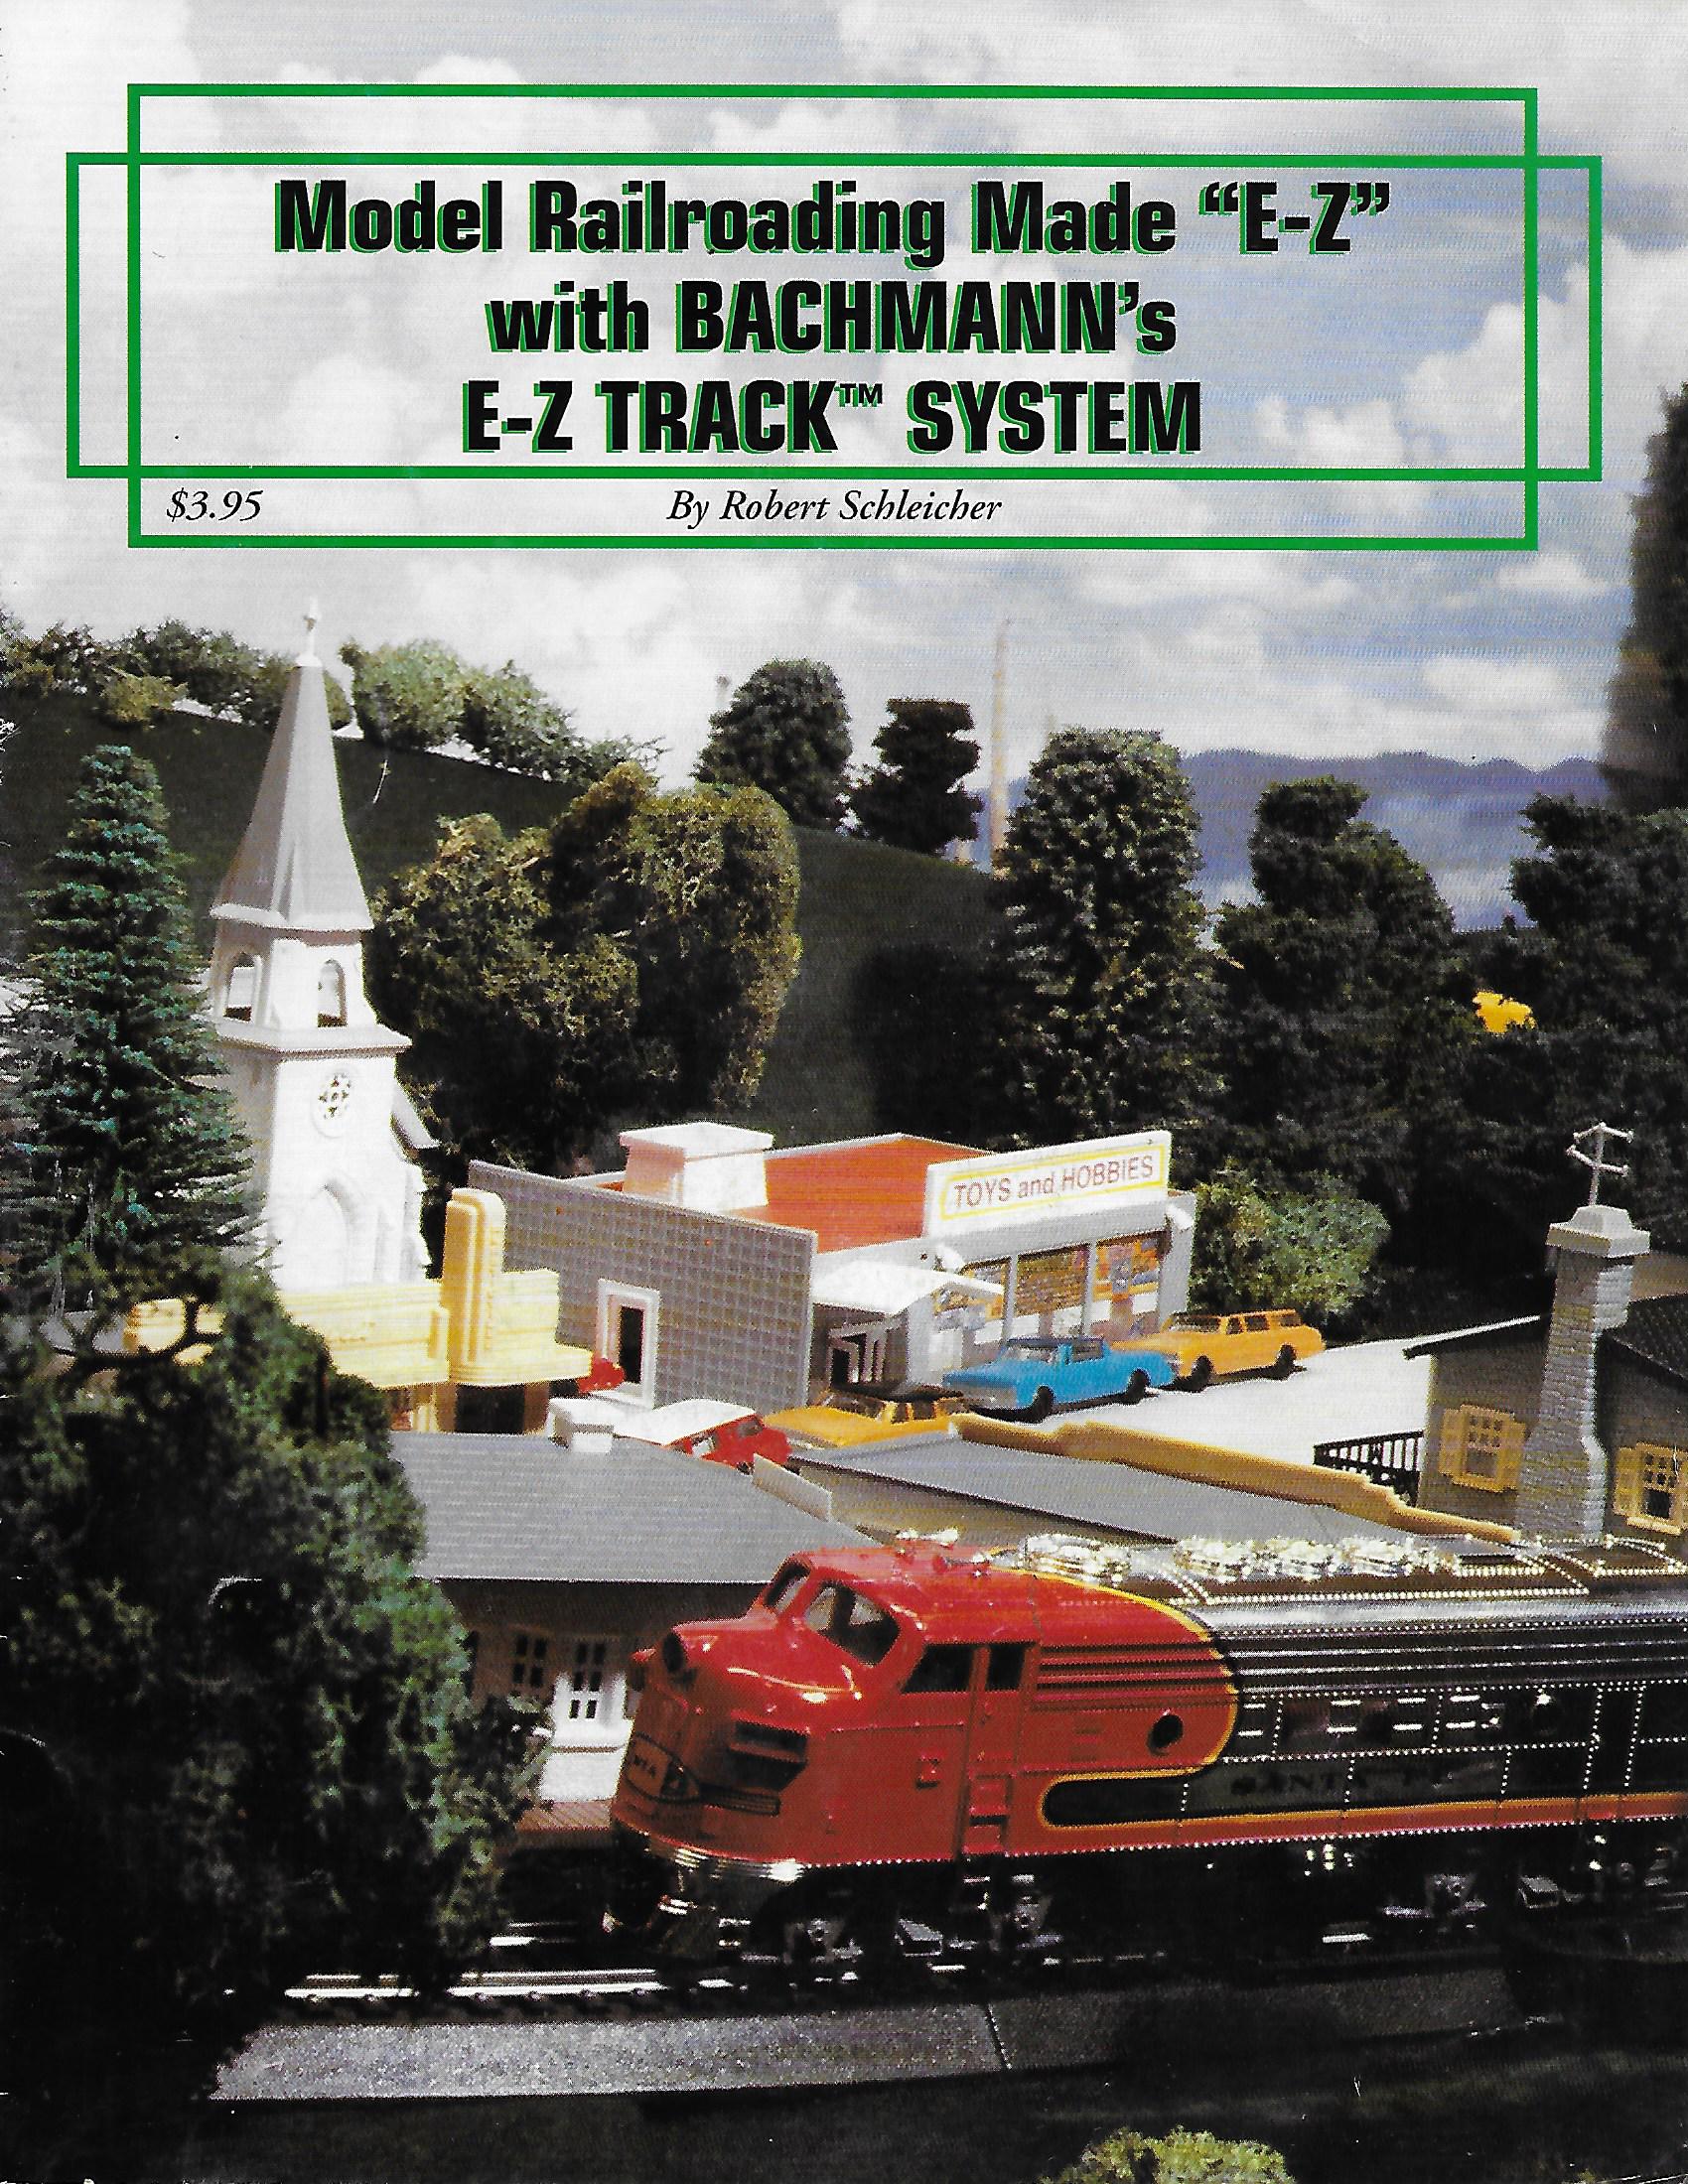 Model Railroading Made "E-Z" with Bachmann's E-Z Track System image